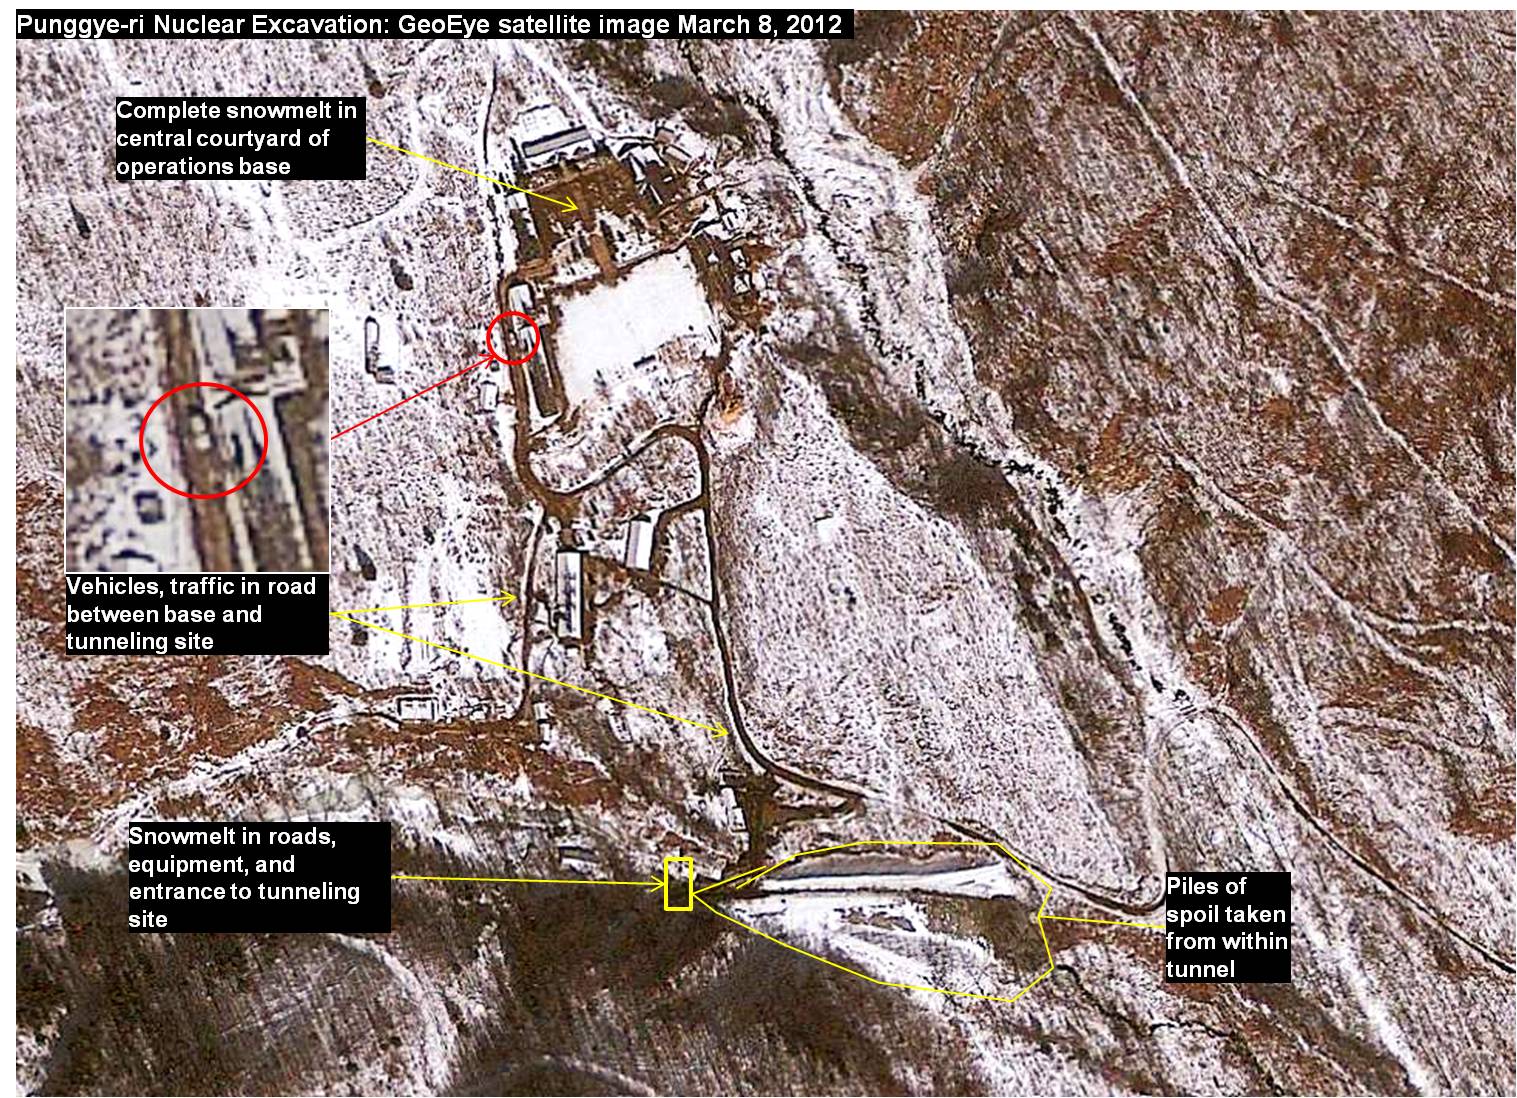 North Korean Nuclear Test Preparations: An Update